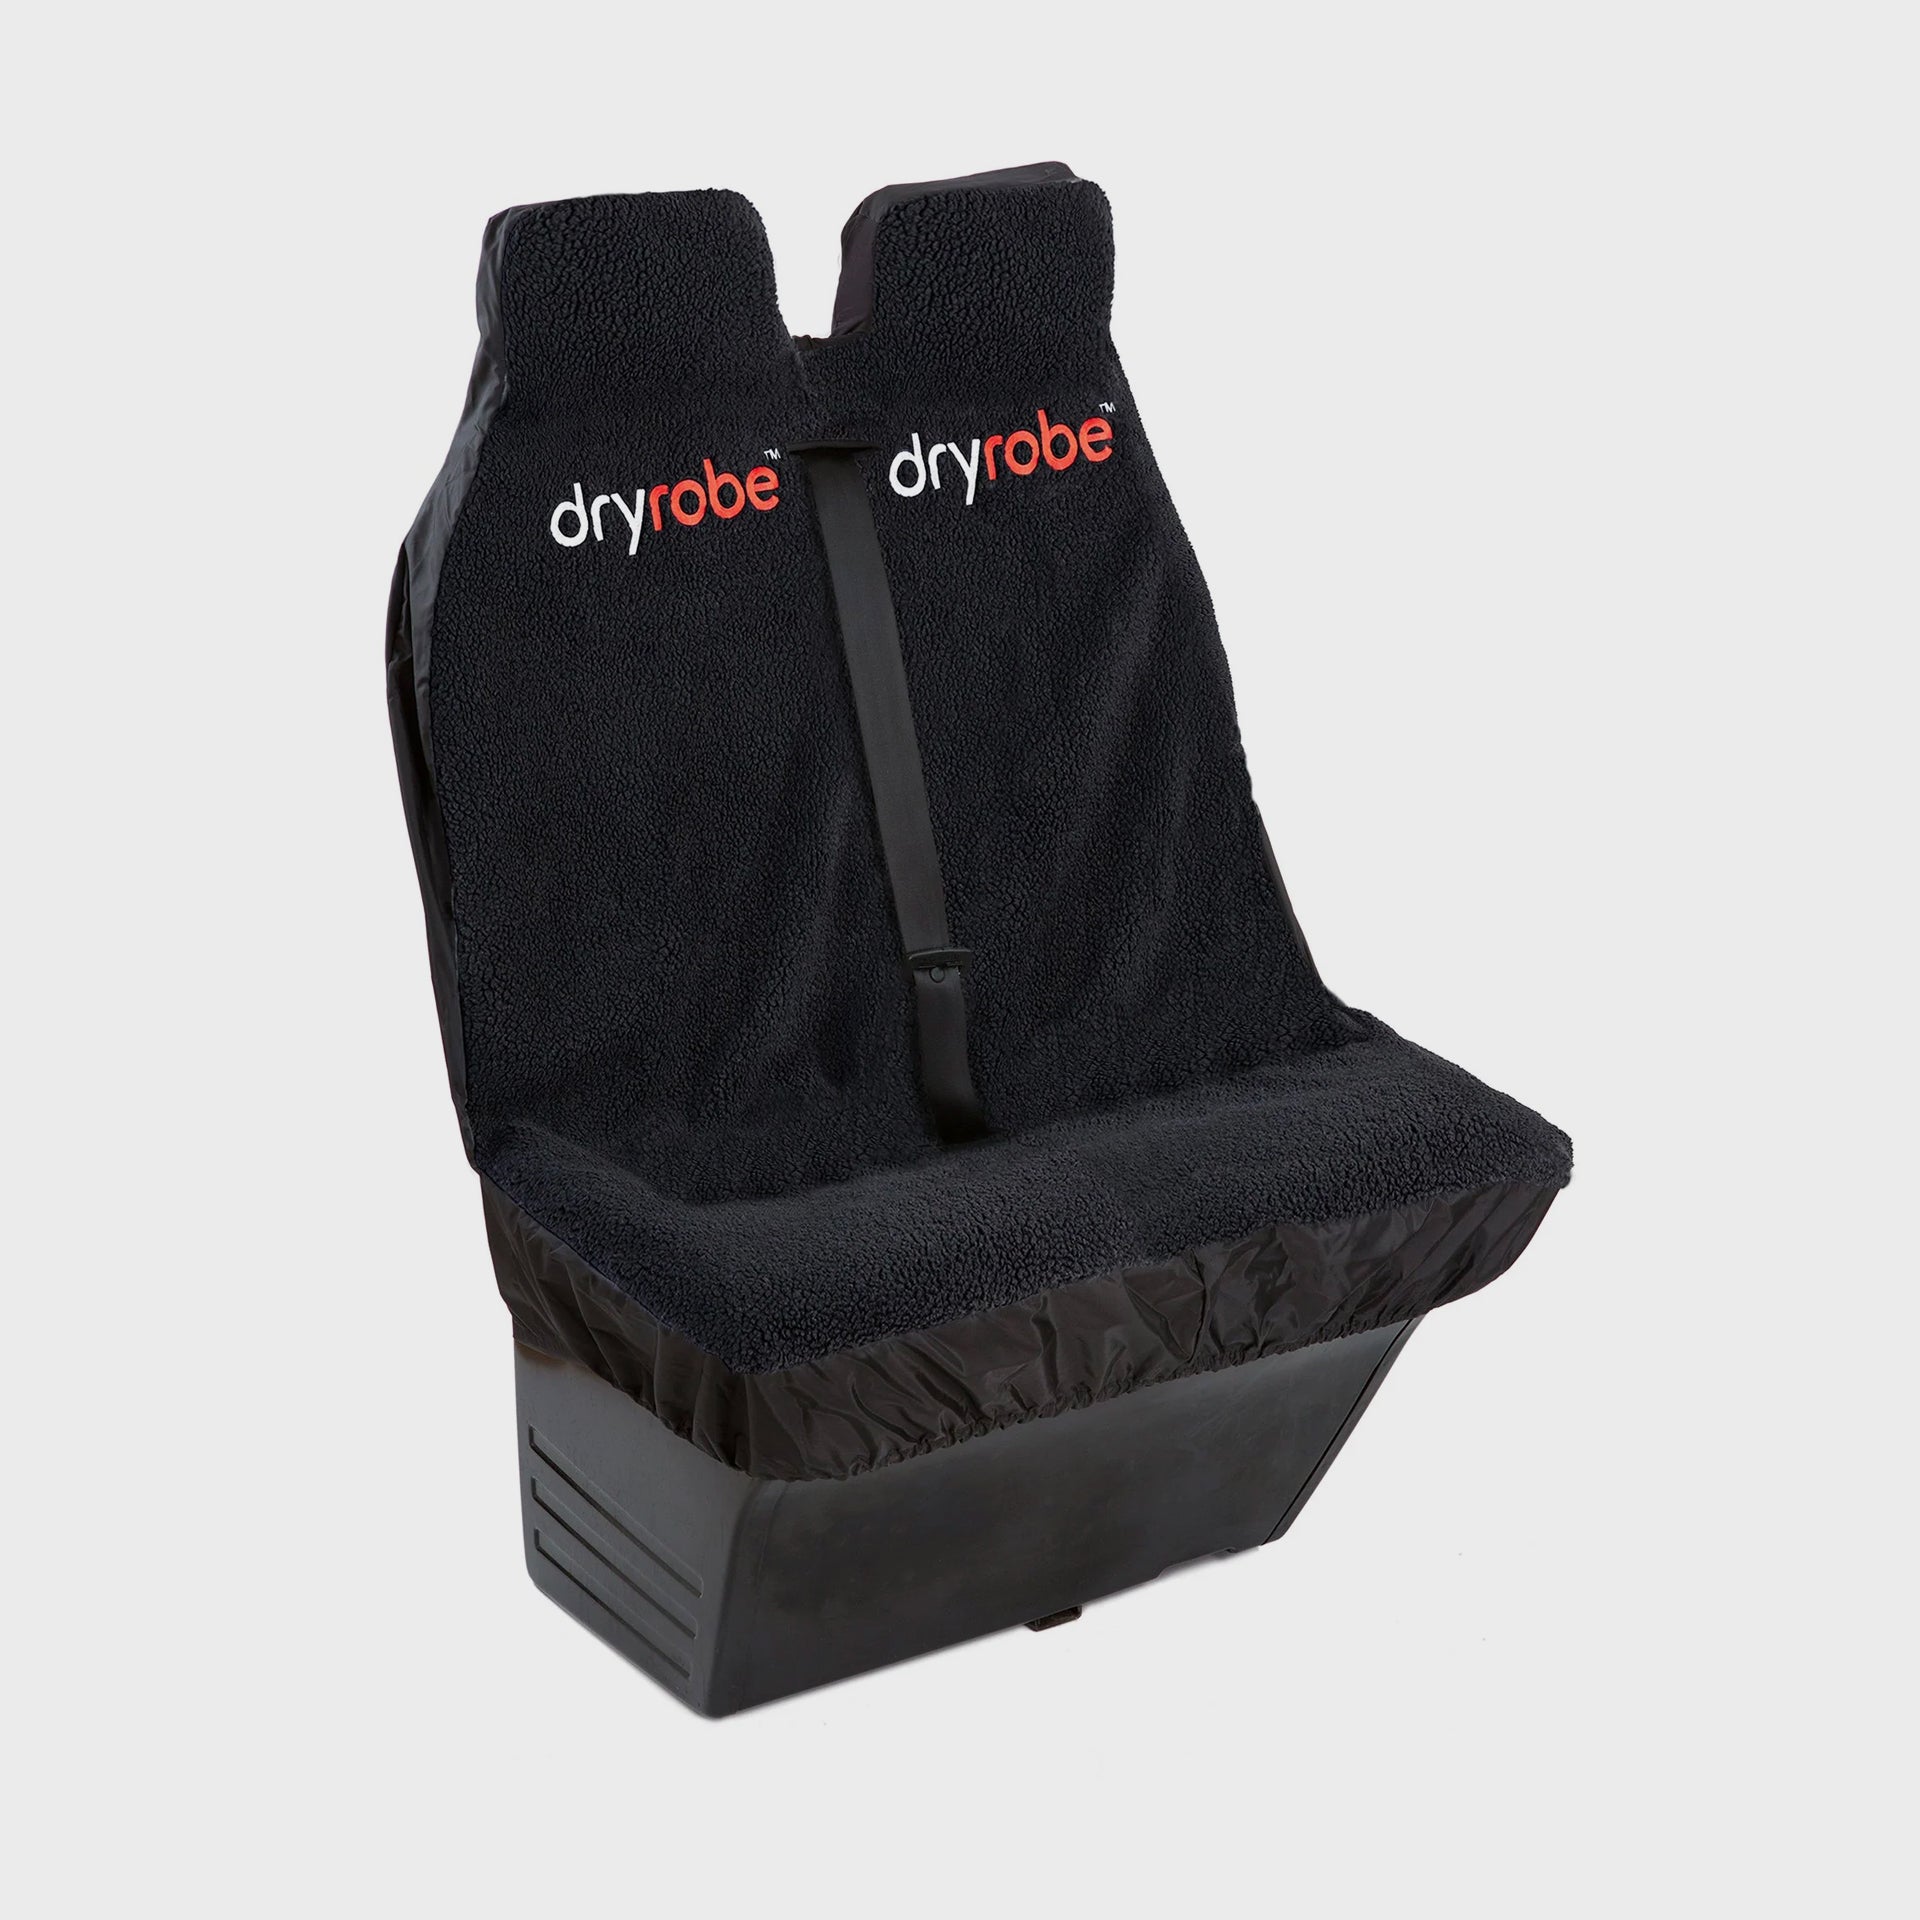 Dryrobe Double Car Seat Cover - Black/Black - ManGo Surfing